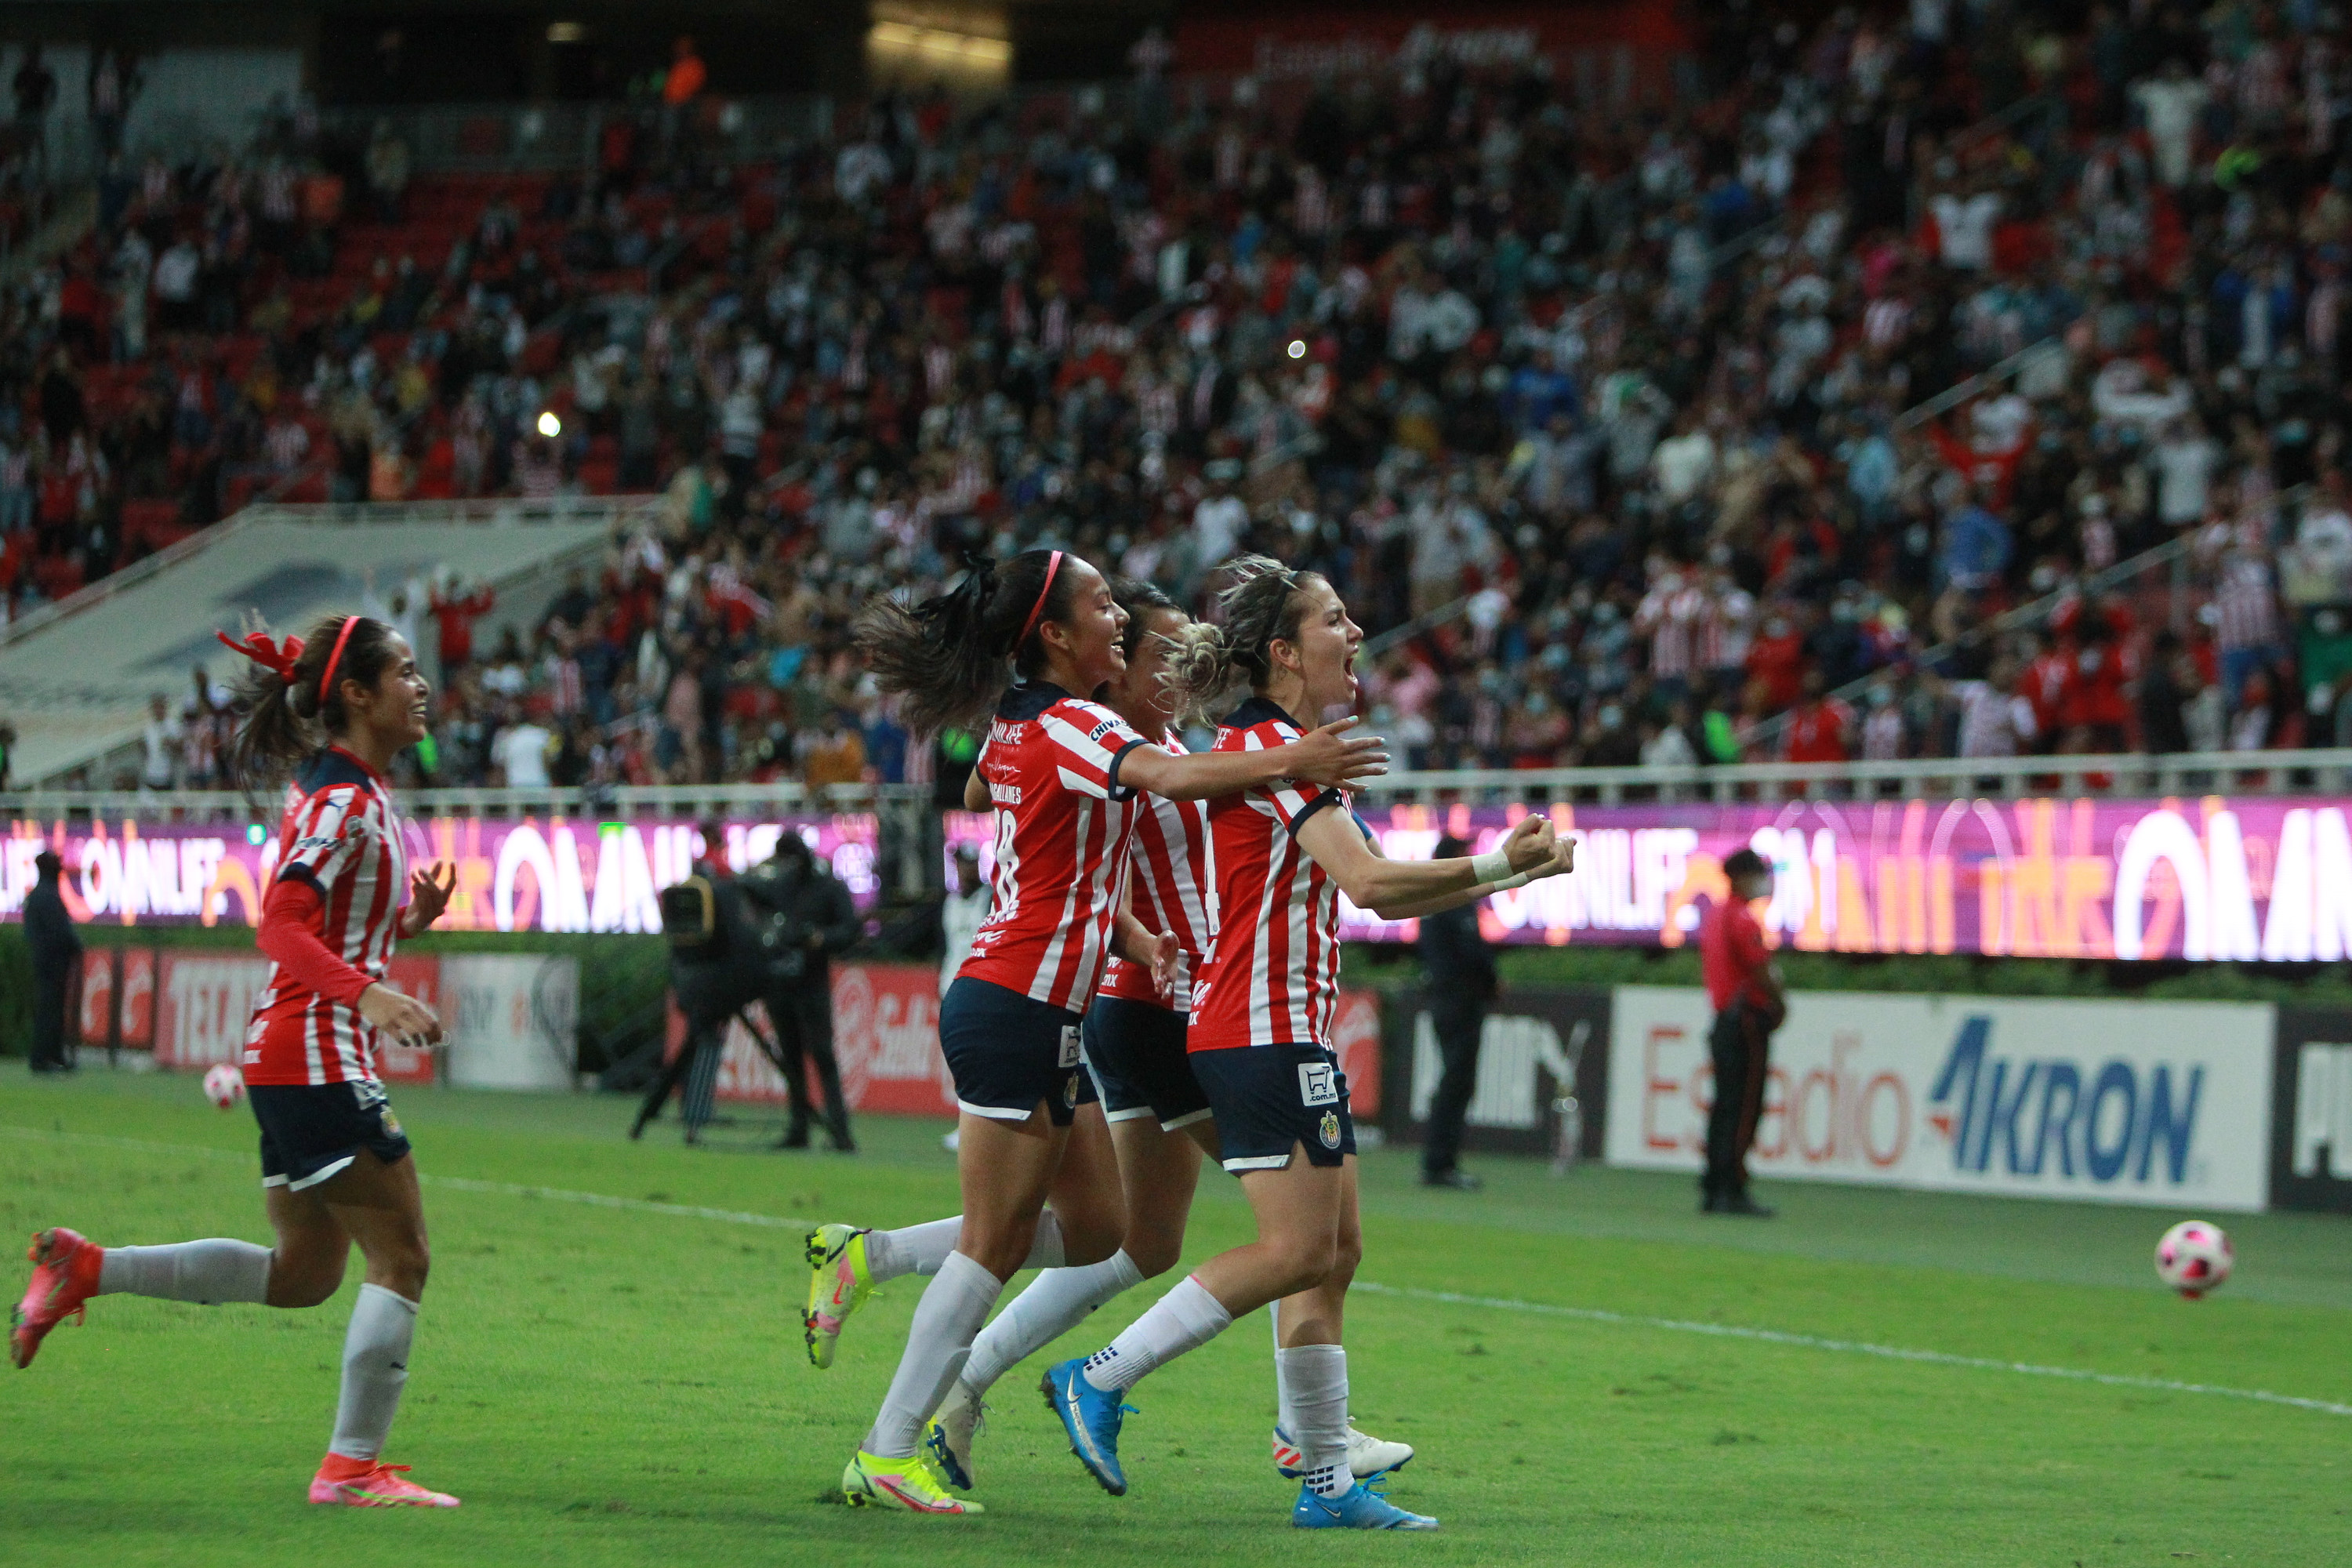 Chivas femenil renovó a la goleadora Alicia Cervantes hasta 2024 - Infobae